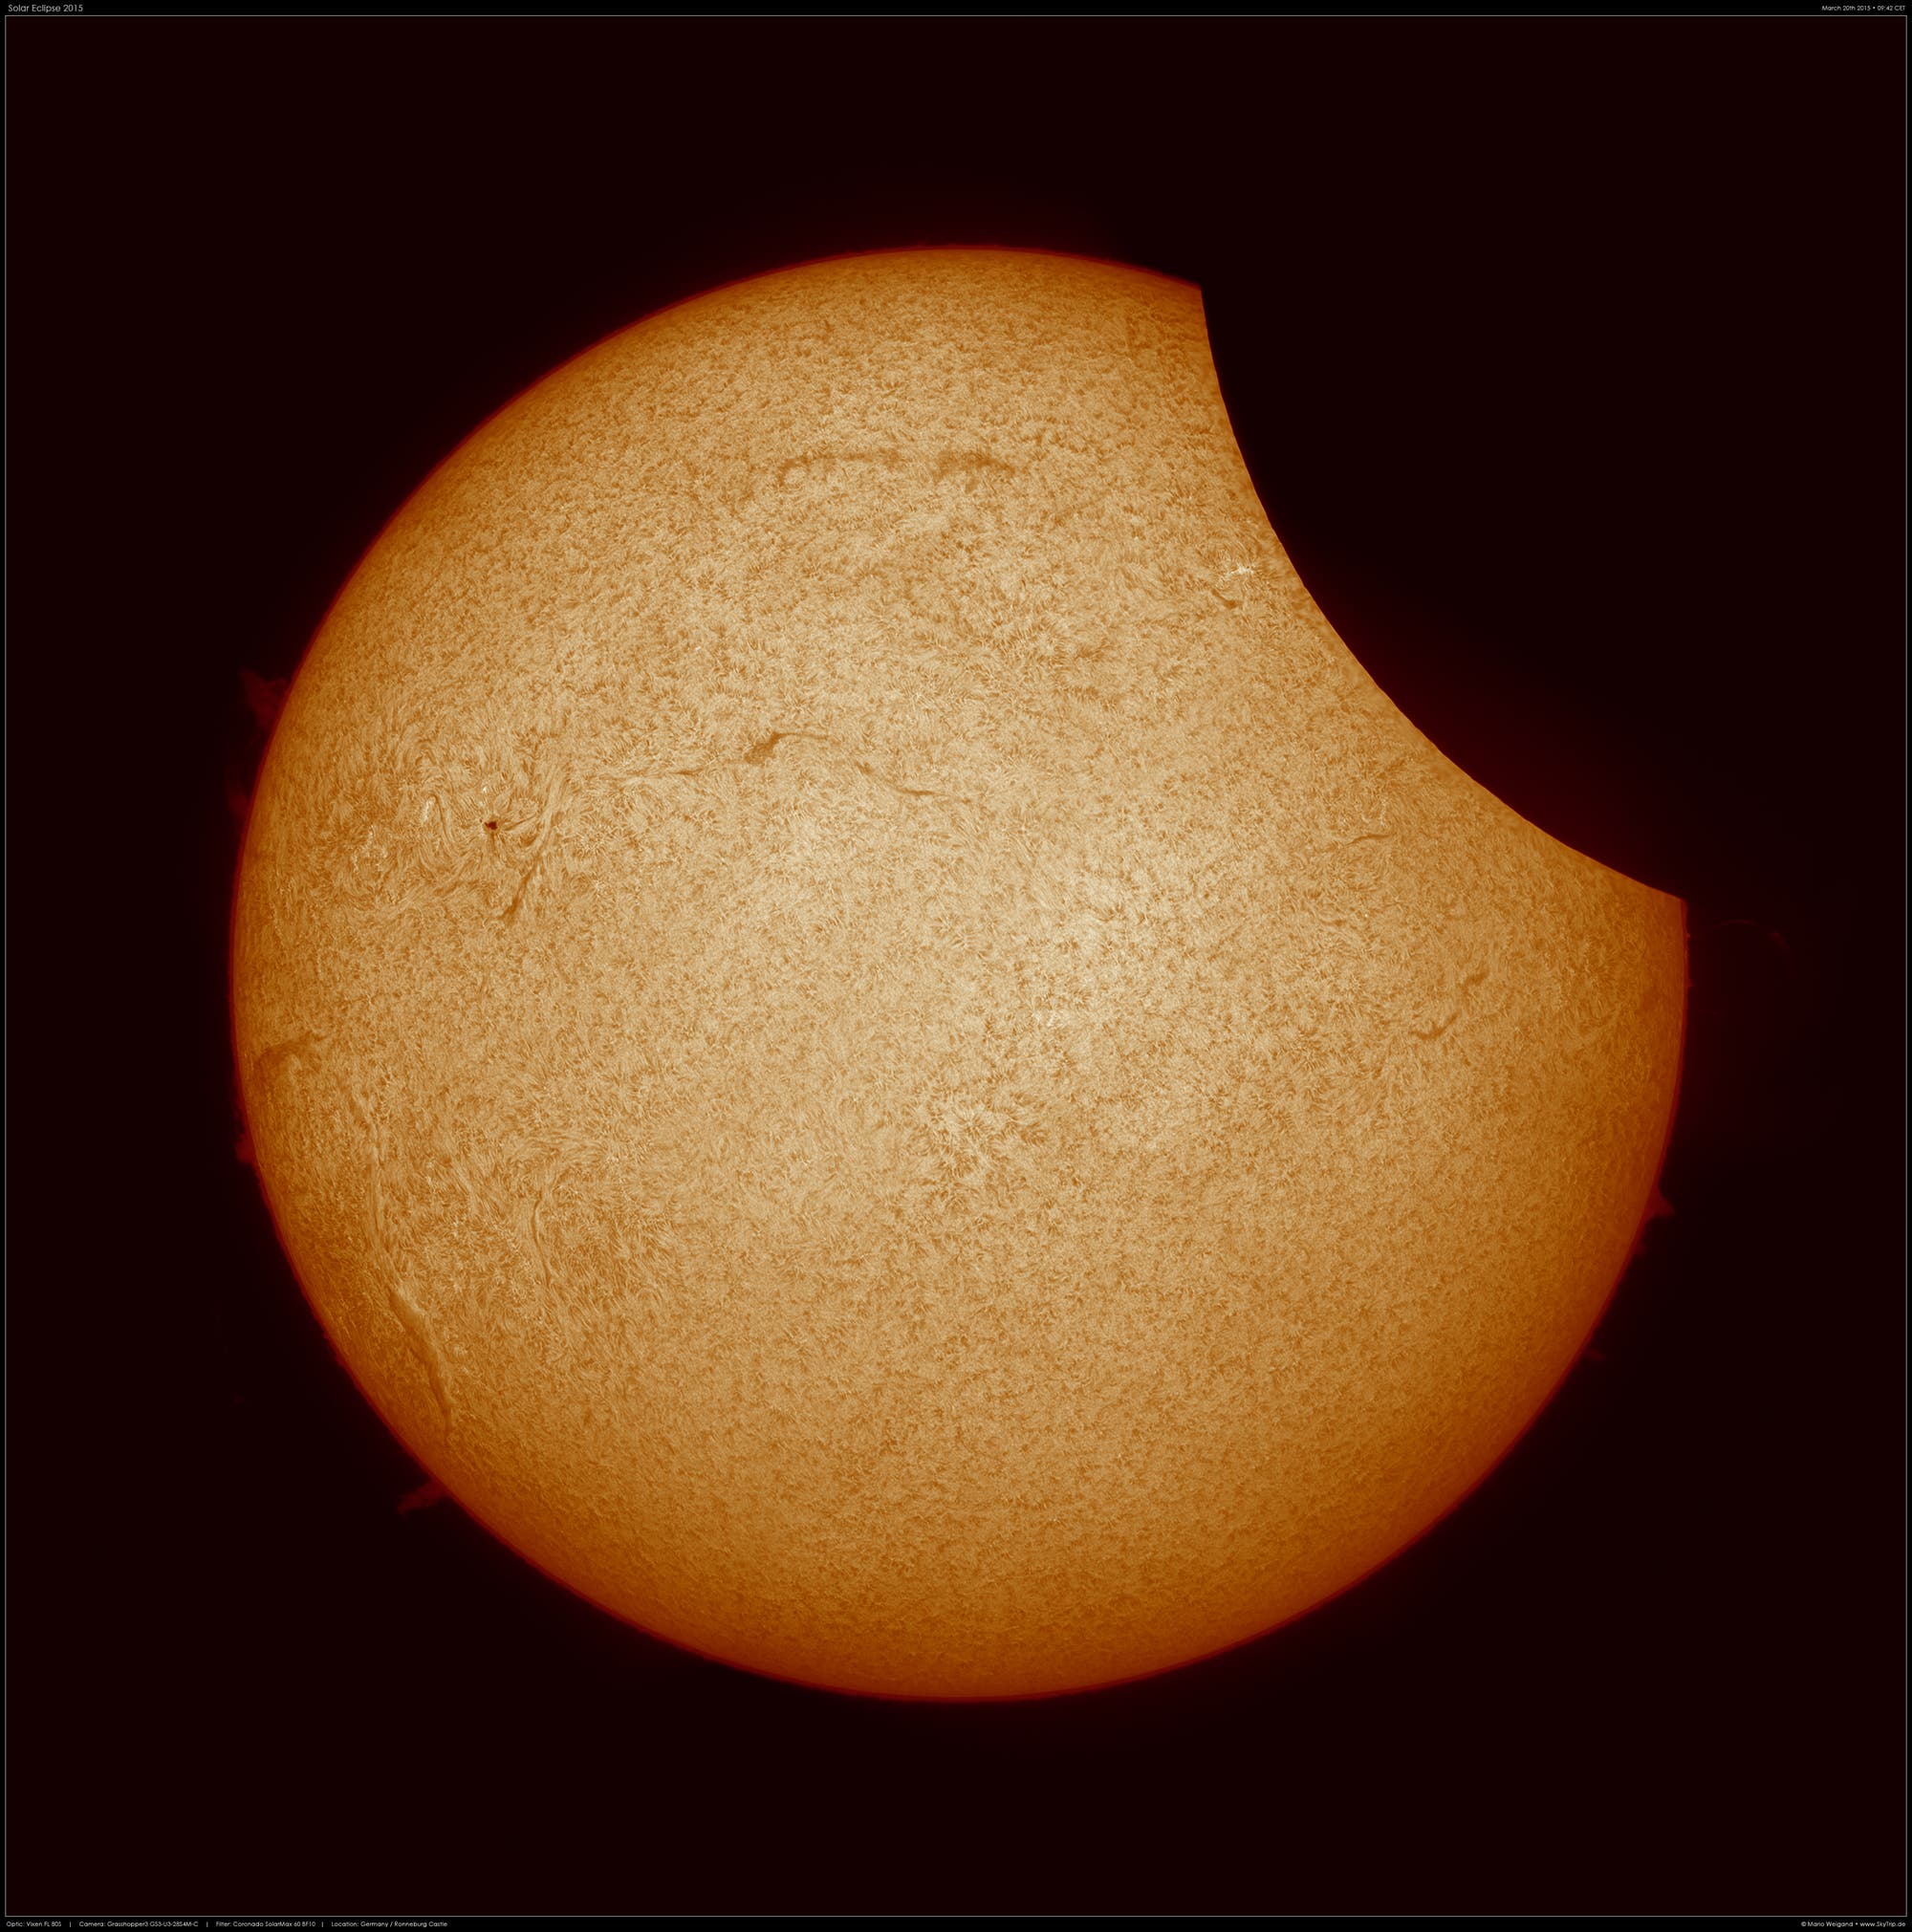 Sonnenfinsternis 2015 in H-Alpha